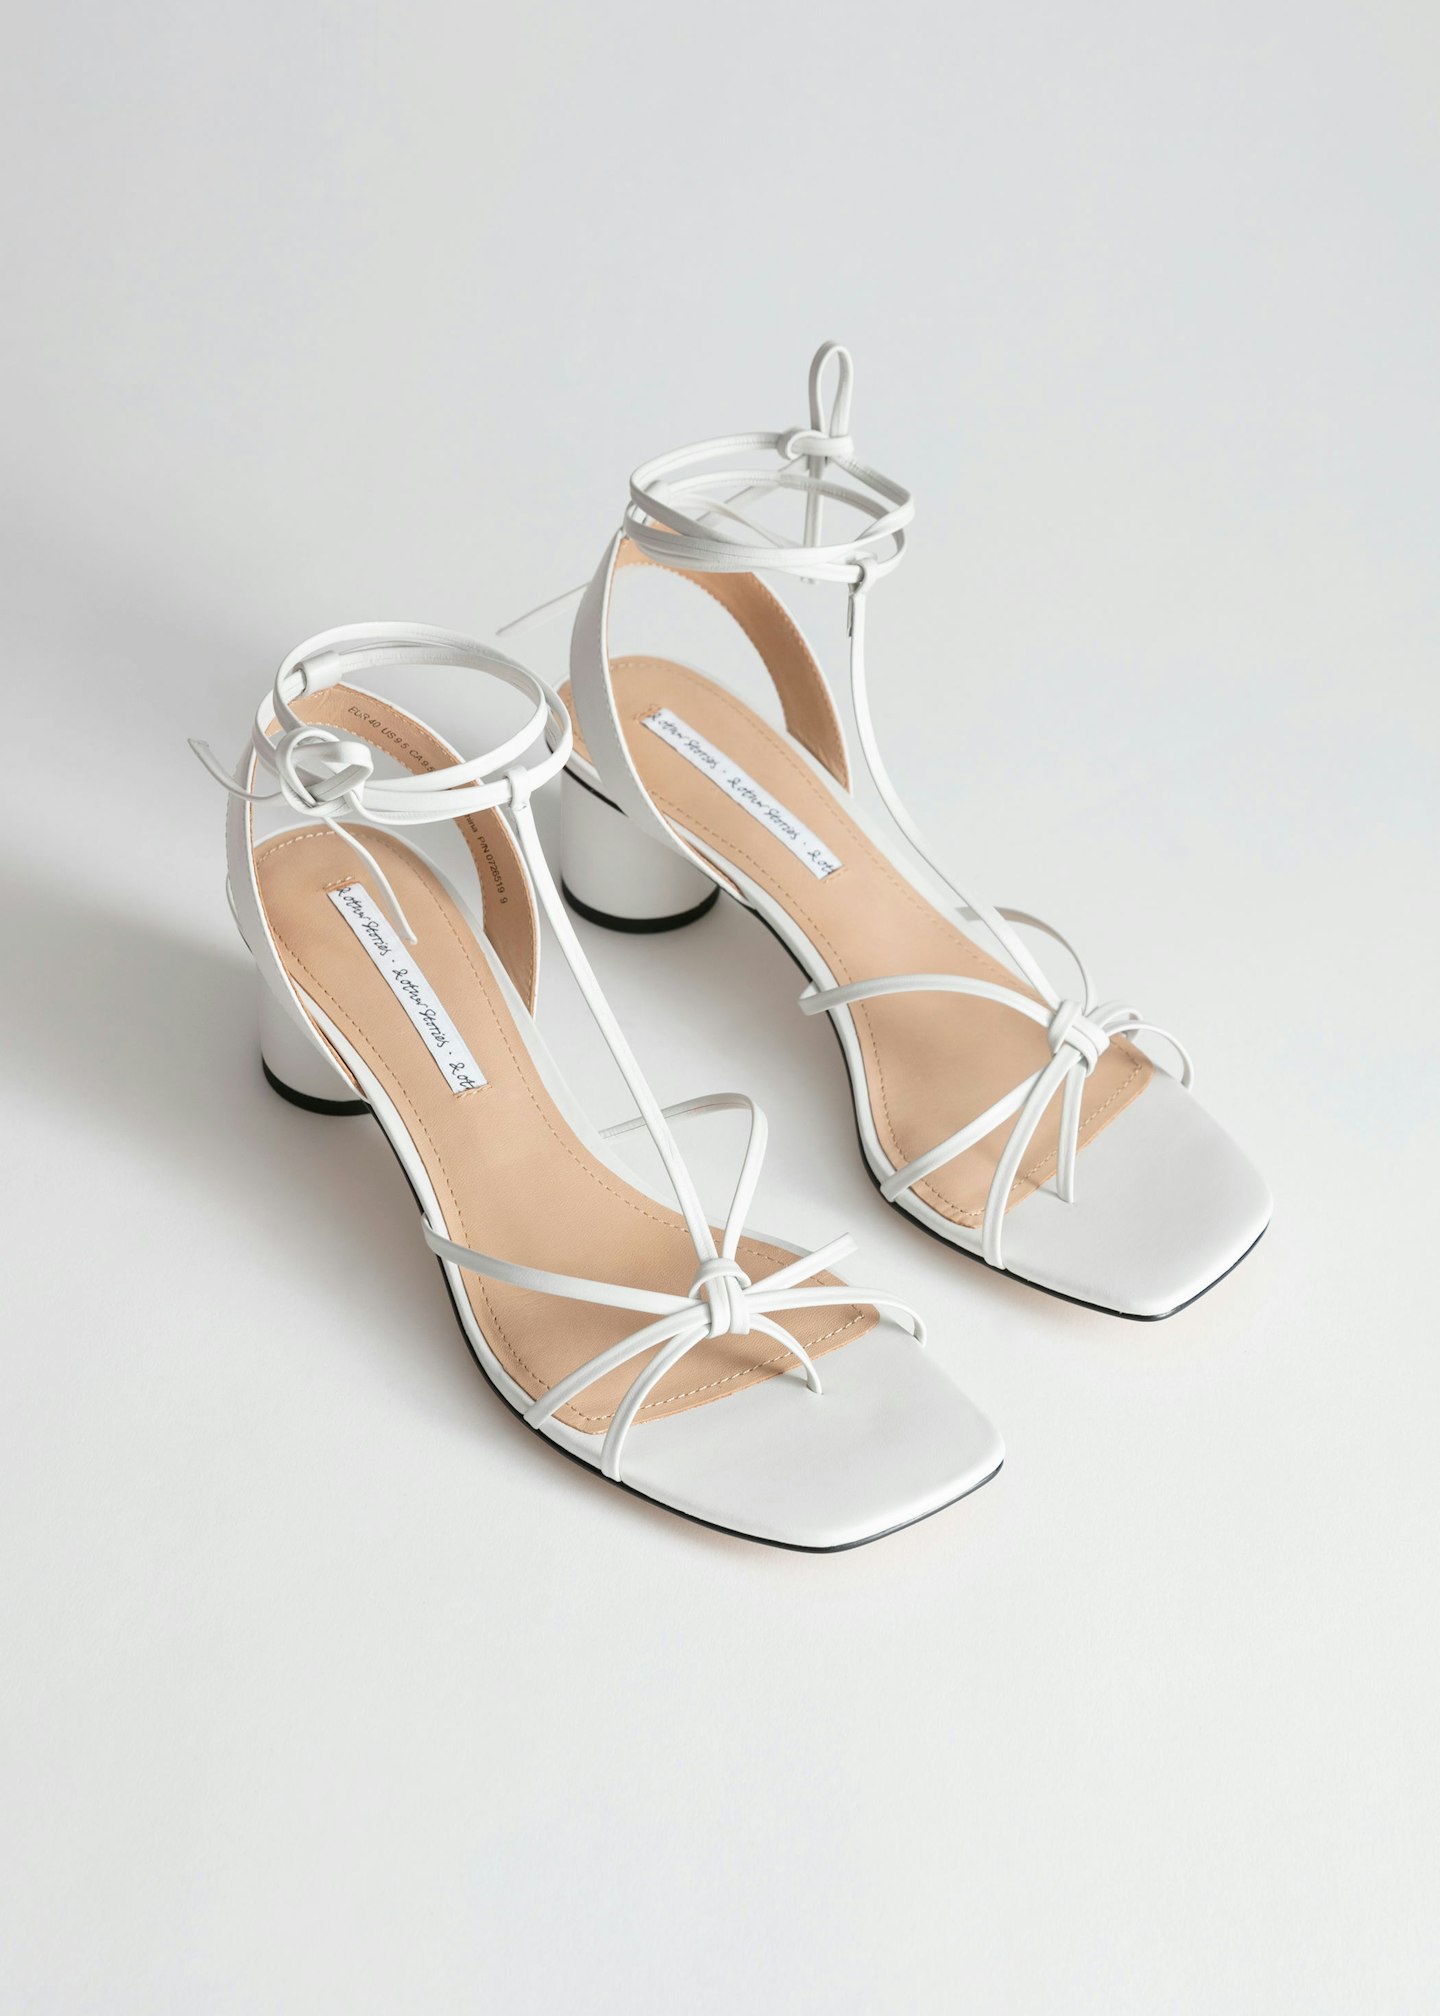 Square Toe Heeled Sandals, £79